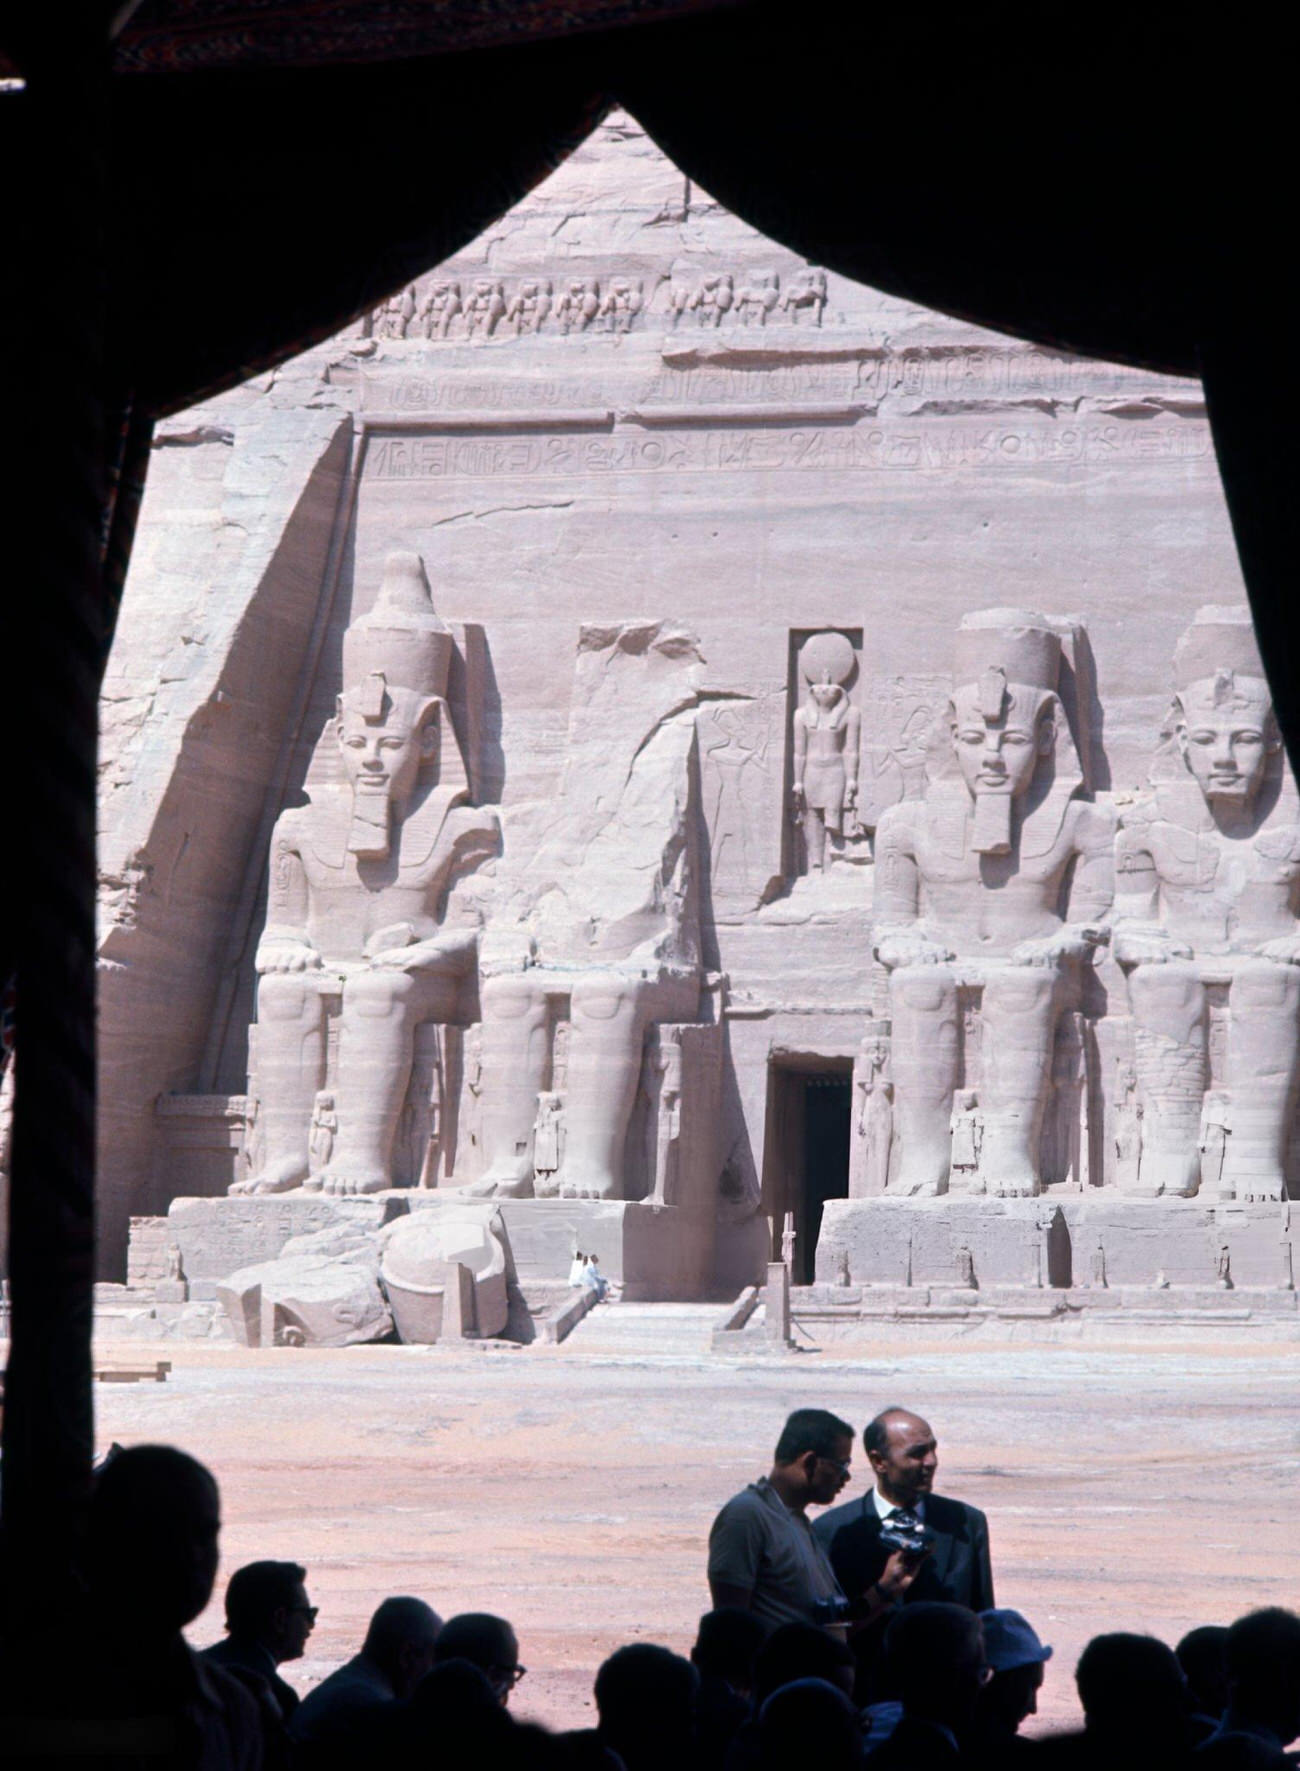 The 1967 celebration of Abu Simbel's temple relocation